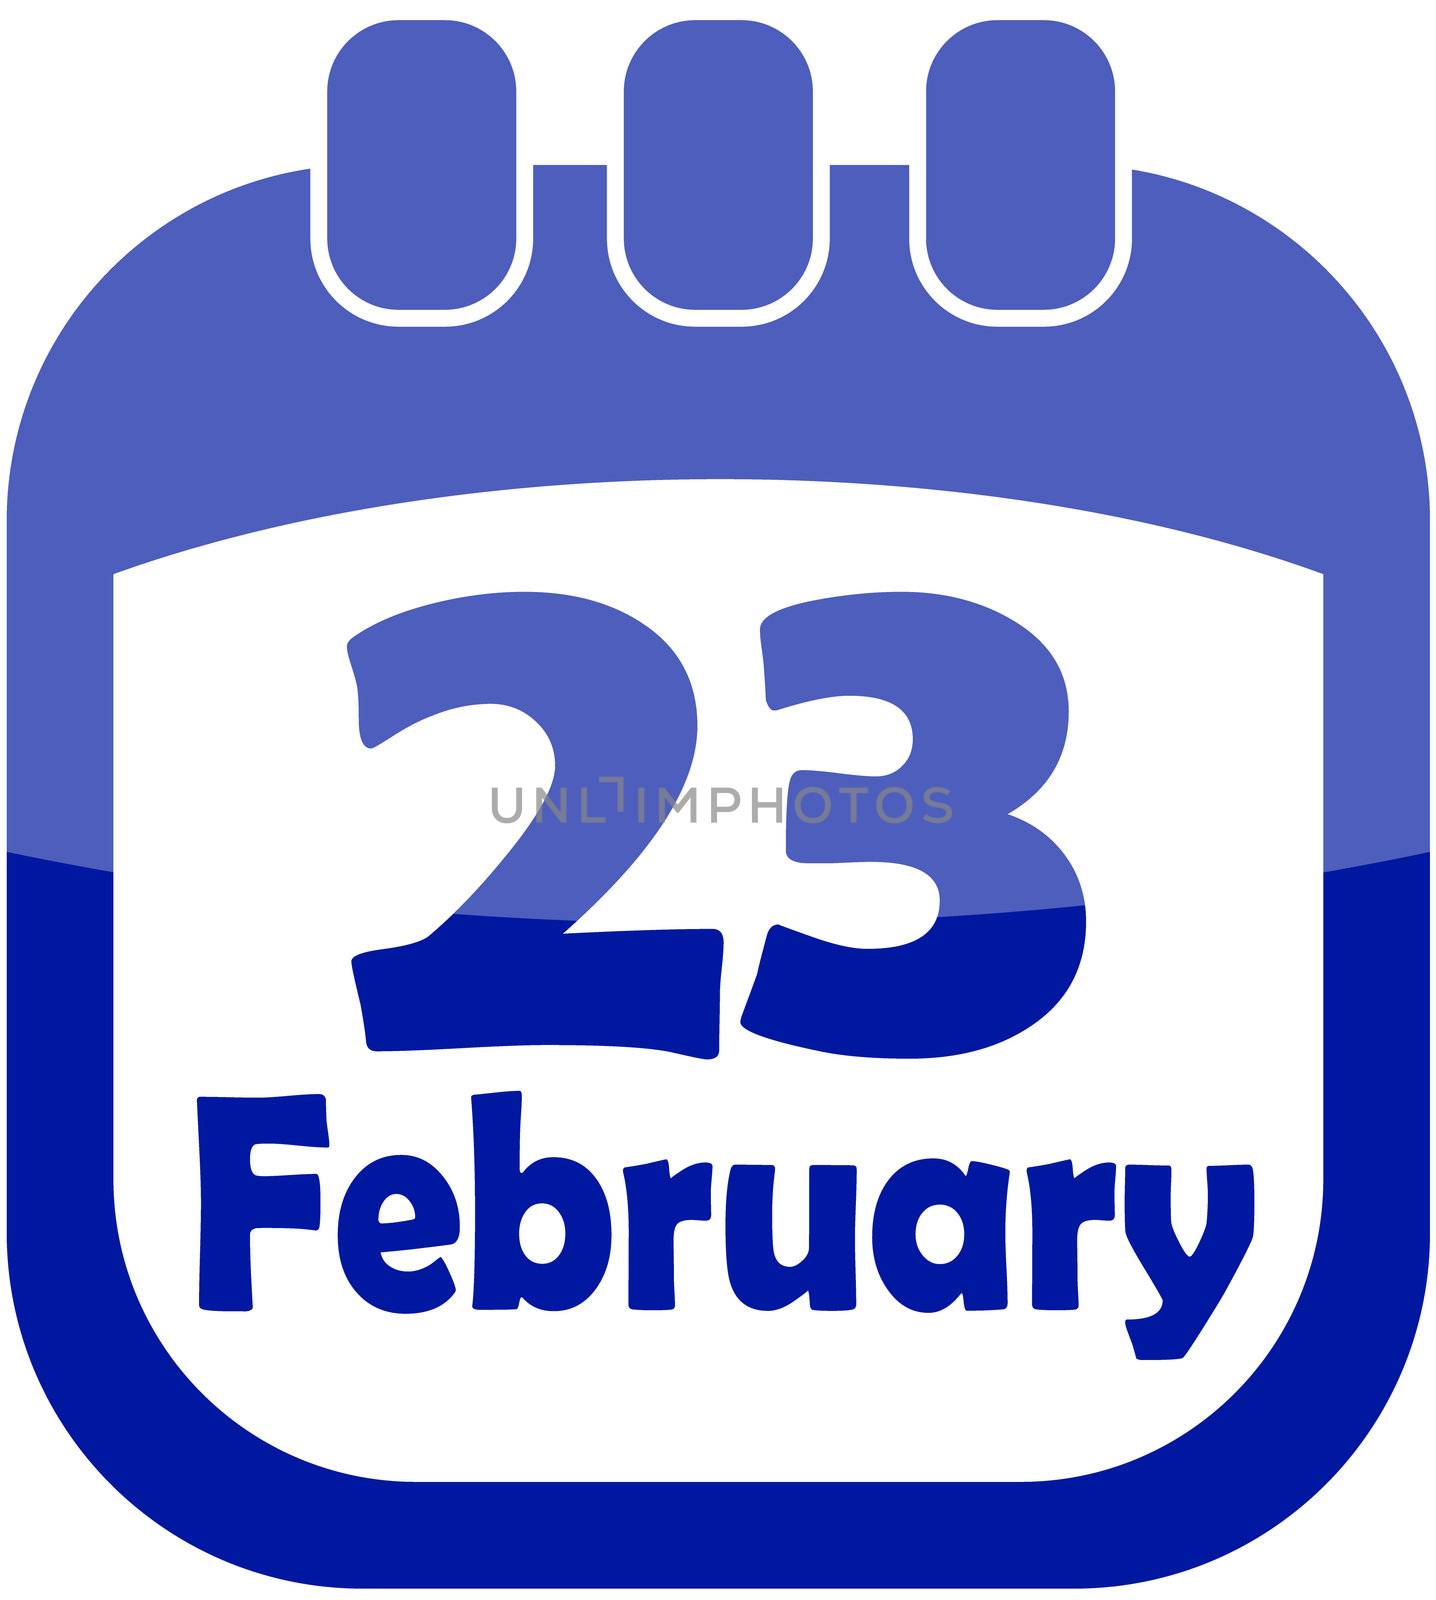 icon for February 23 calendar by rodakm